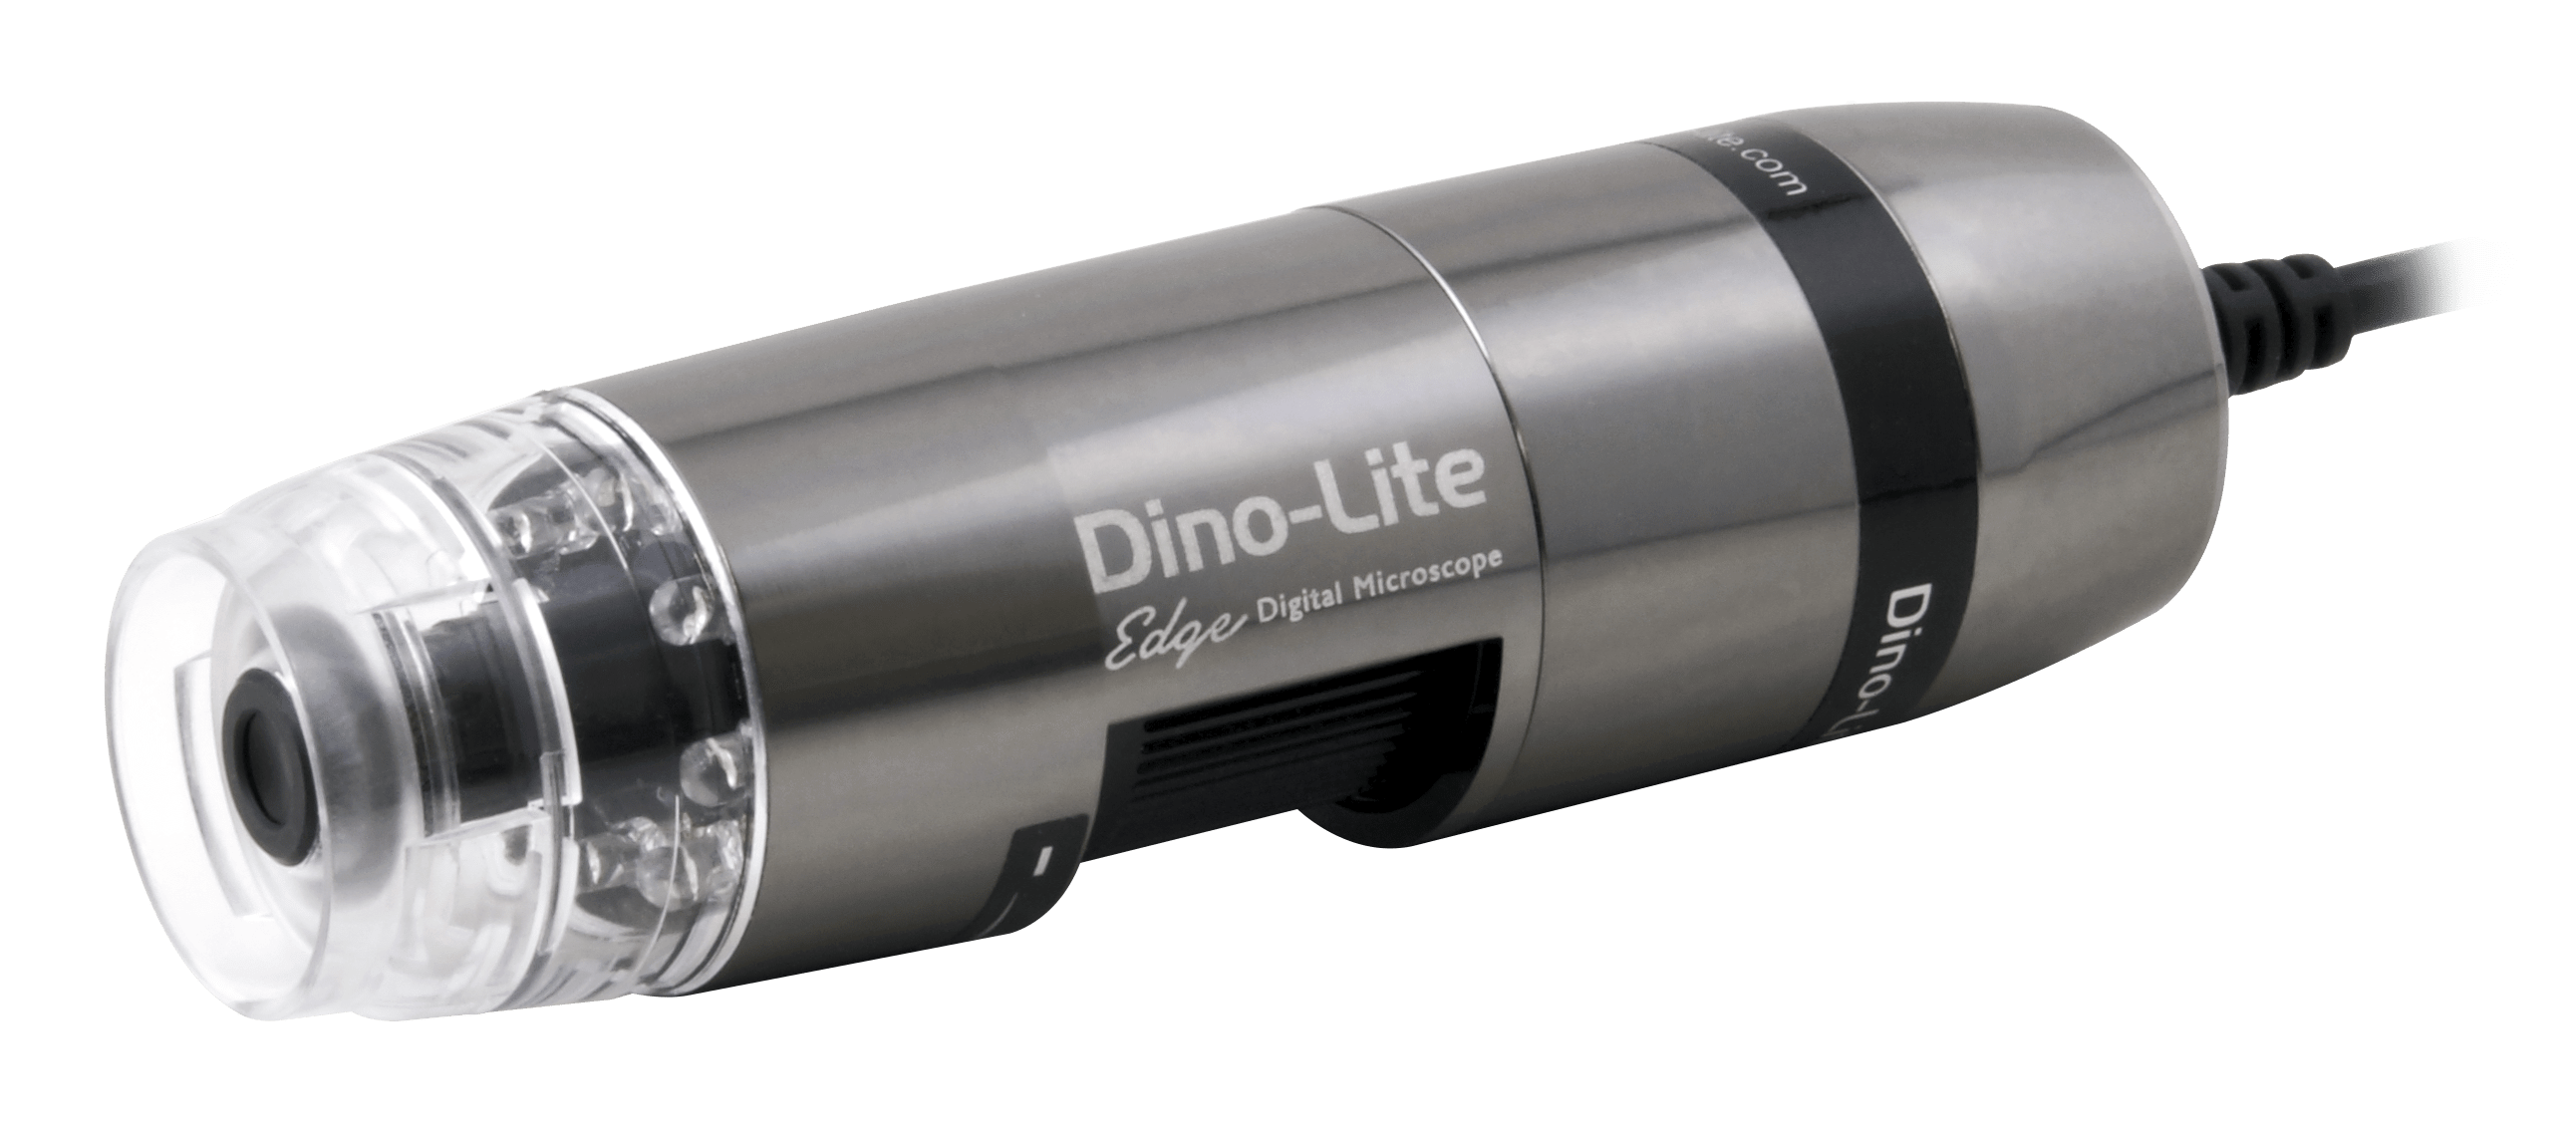 Dino-Lite Edge AM7515MT2A USB Digital Microscope